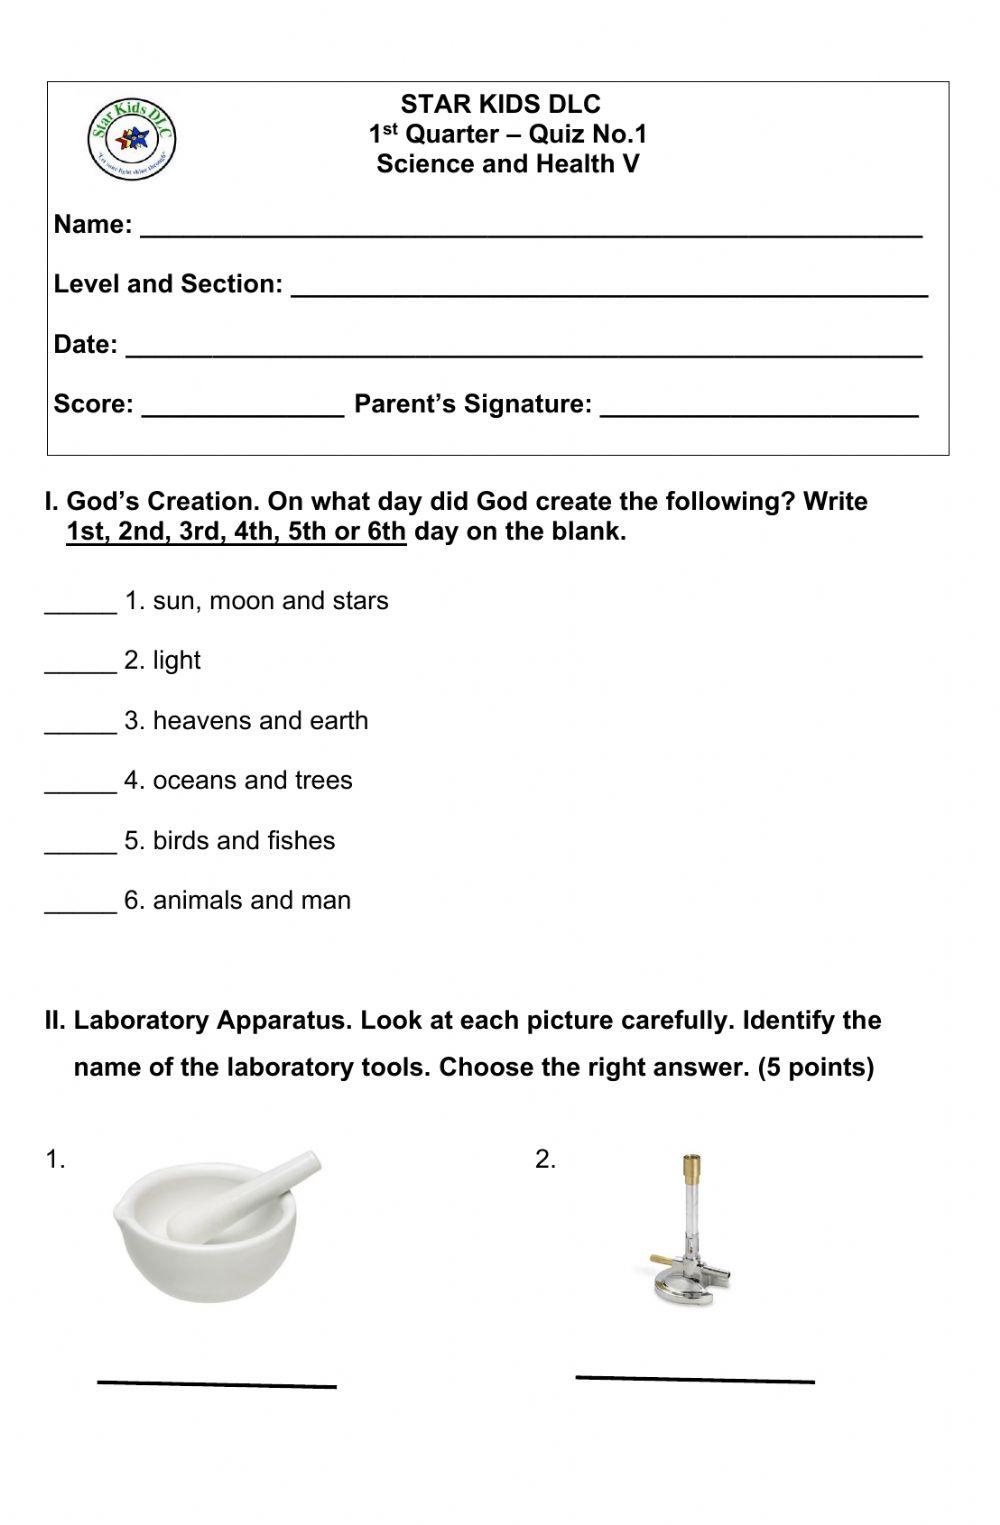 1st. Qtr. Quiz No. 1 Grade 5 - Science